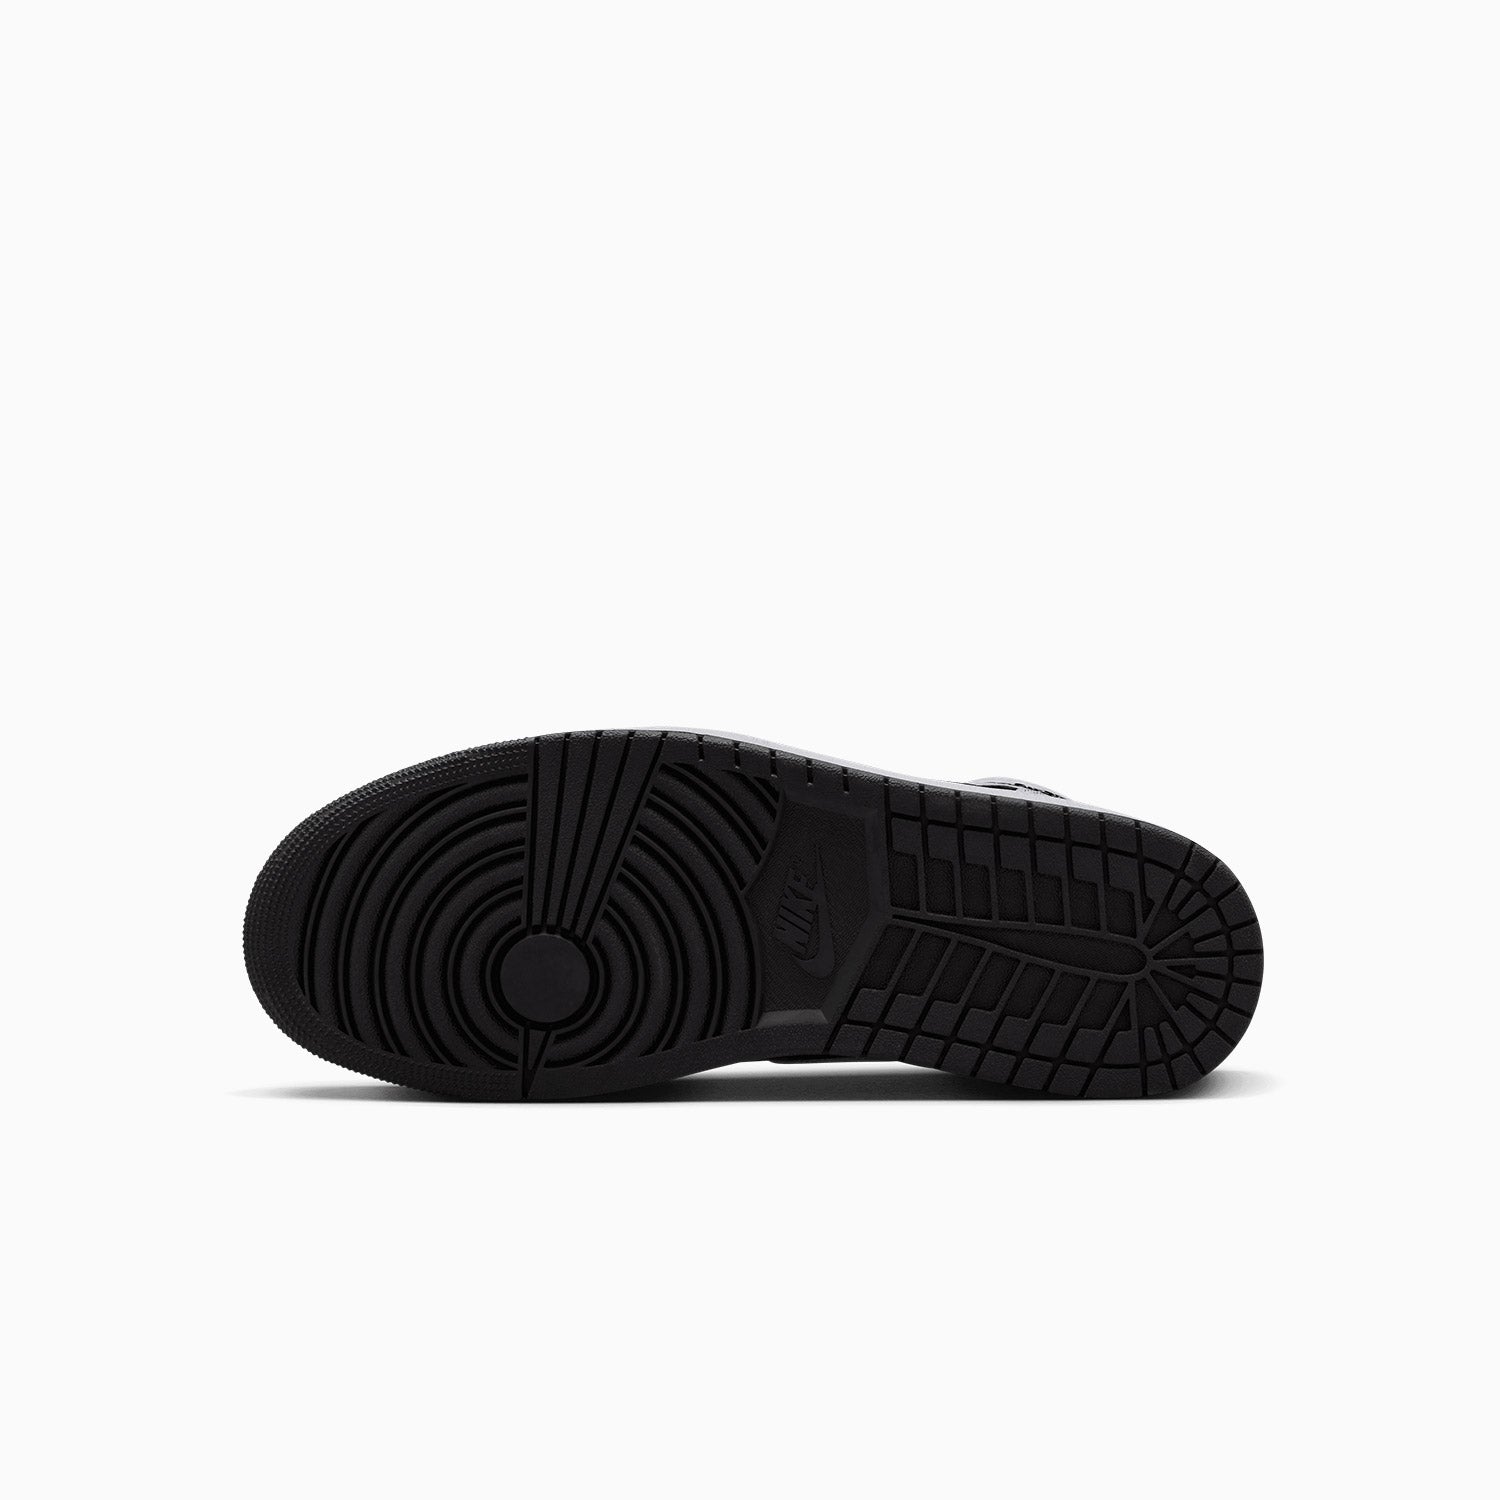 mens-air-jordan-1-retro-high-og-black-white-shoes-dz5485-010